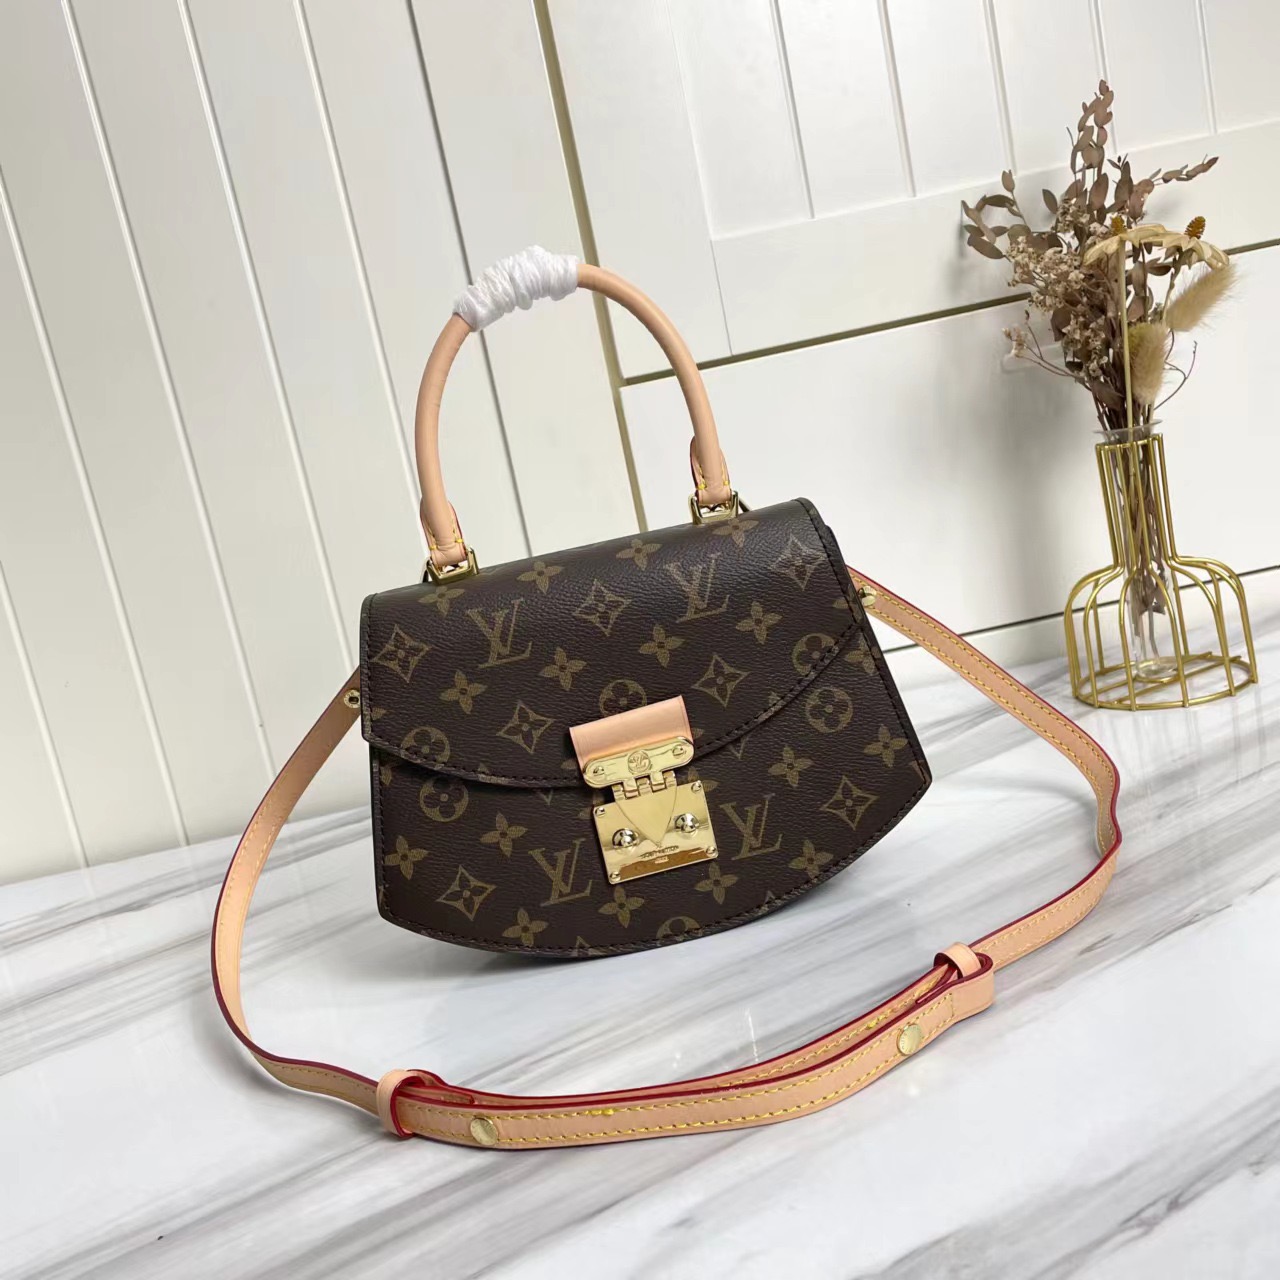 Louis Vuitton Handbags For Woemn # 268947, cheap LV Handbags, only $89!